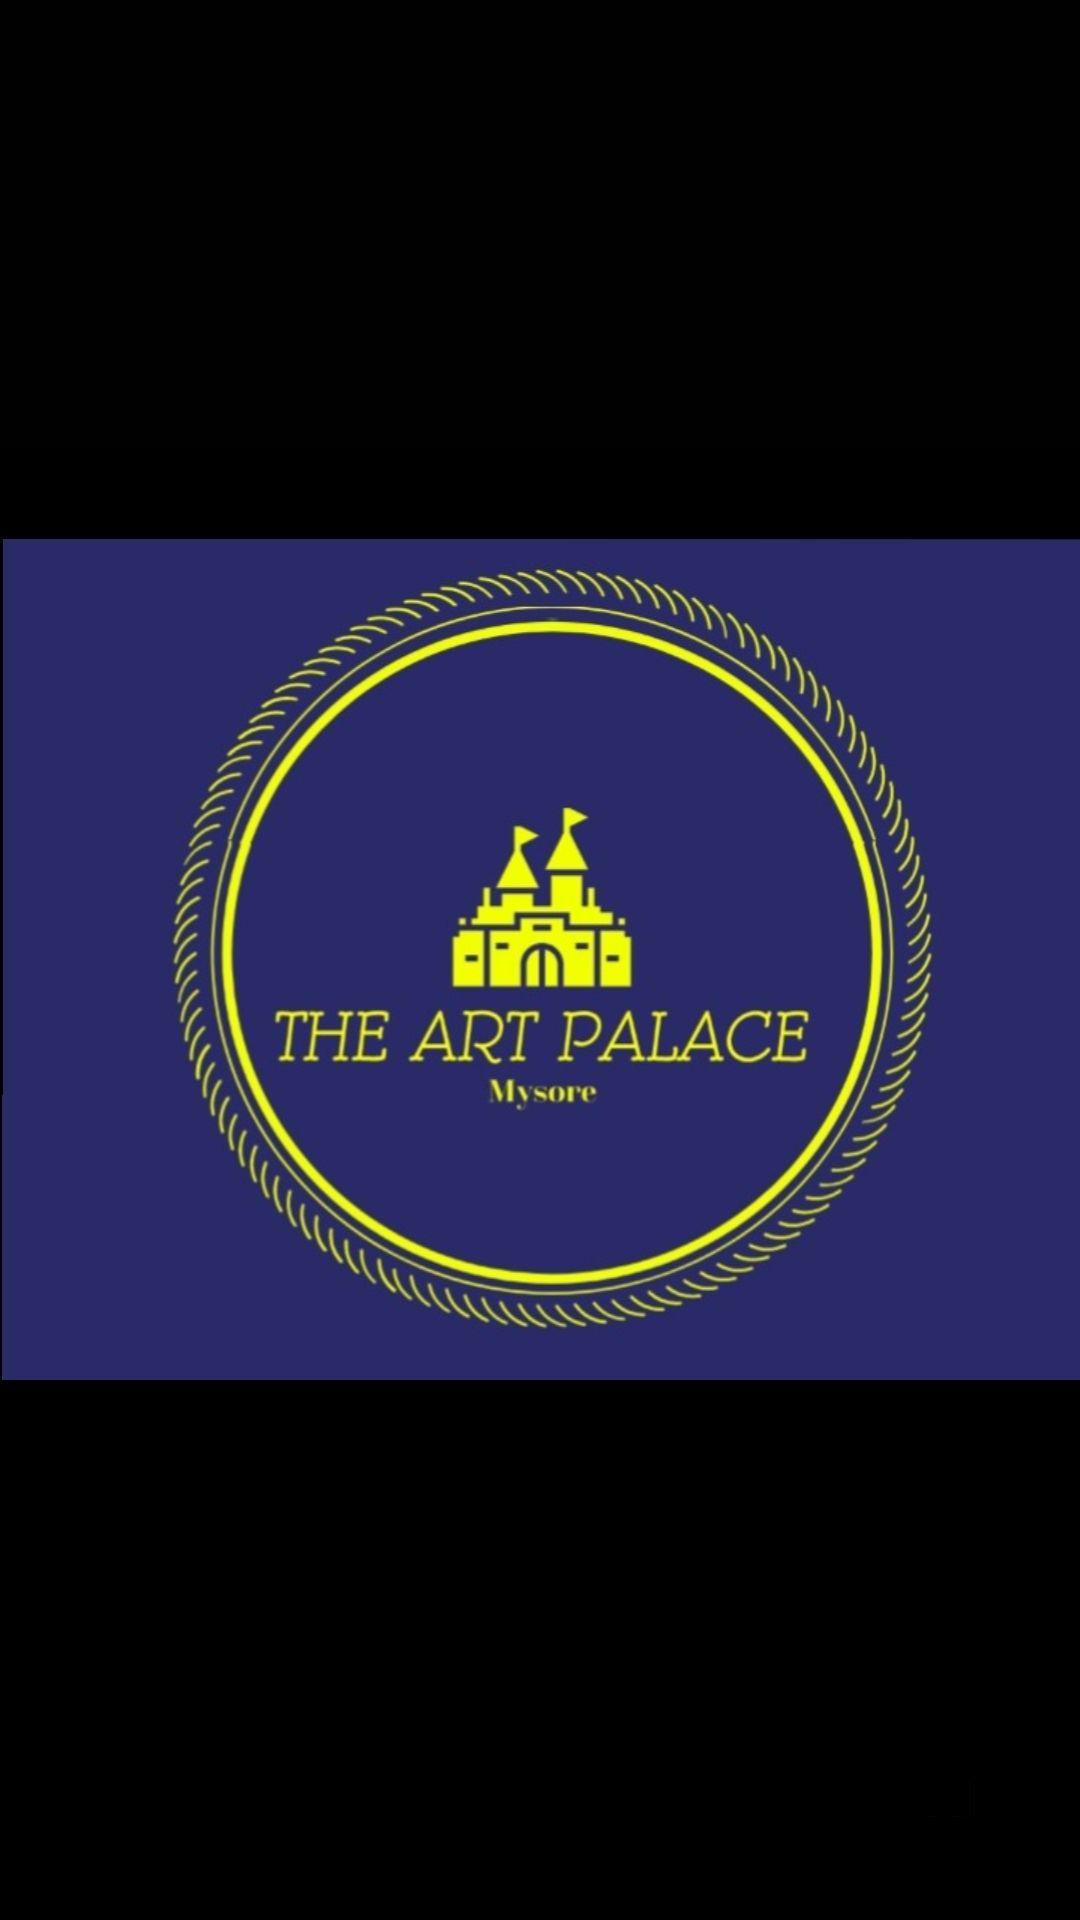 Art Palace Logo - The Art Palace Photo, Ashoka Road, Mysore- Picture & Image